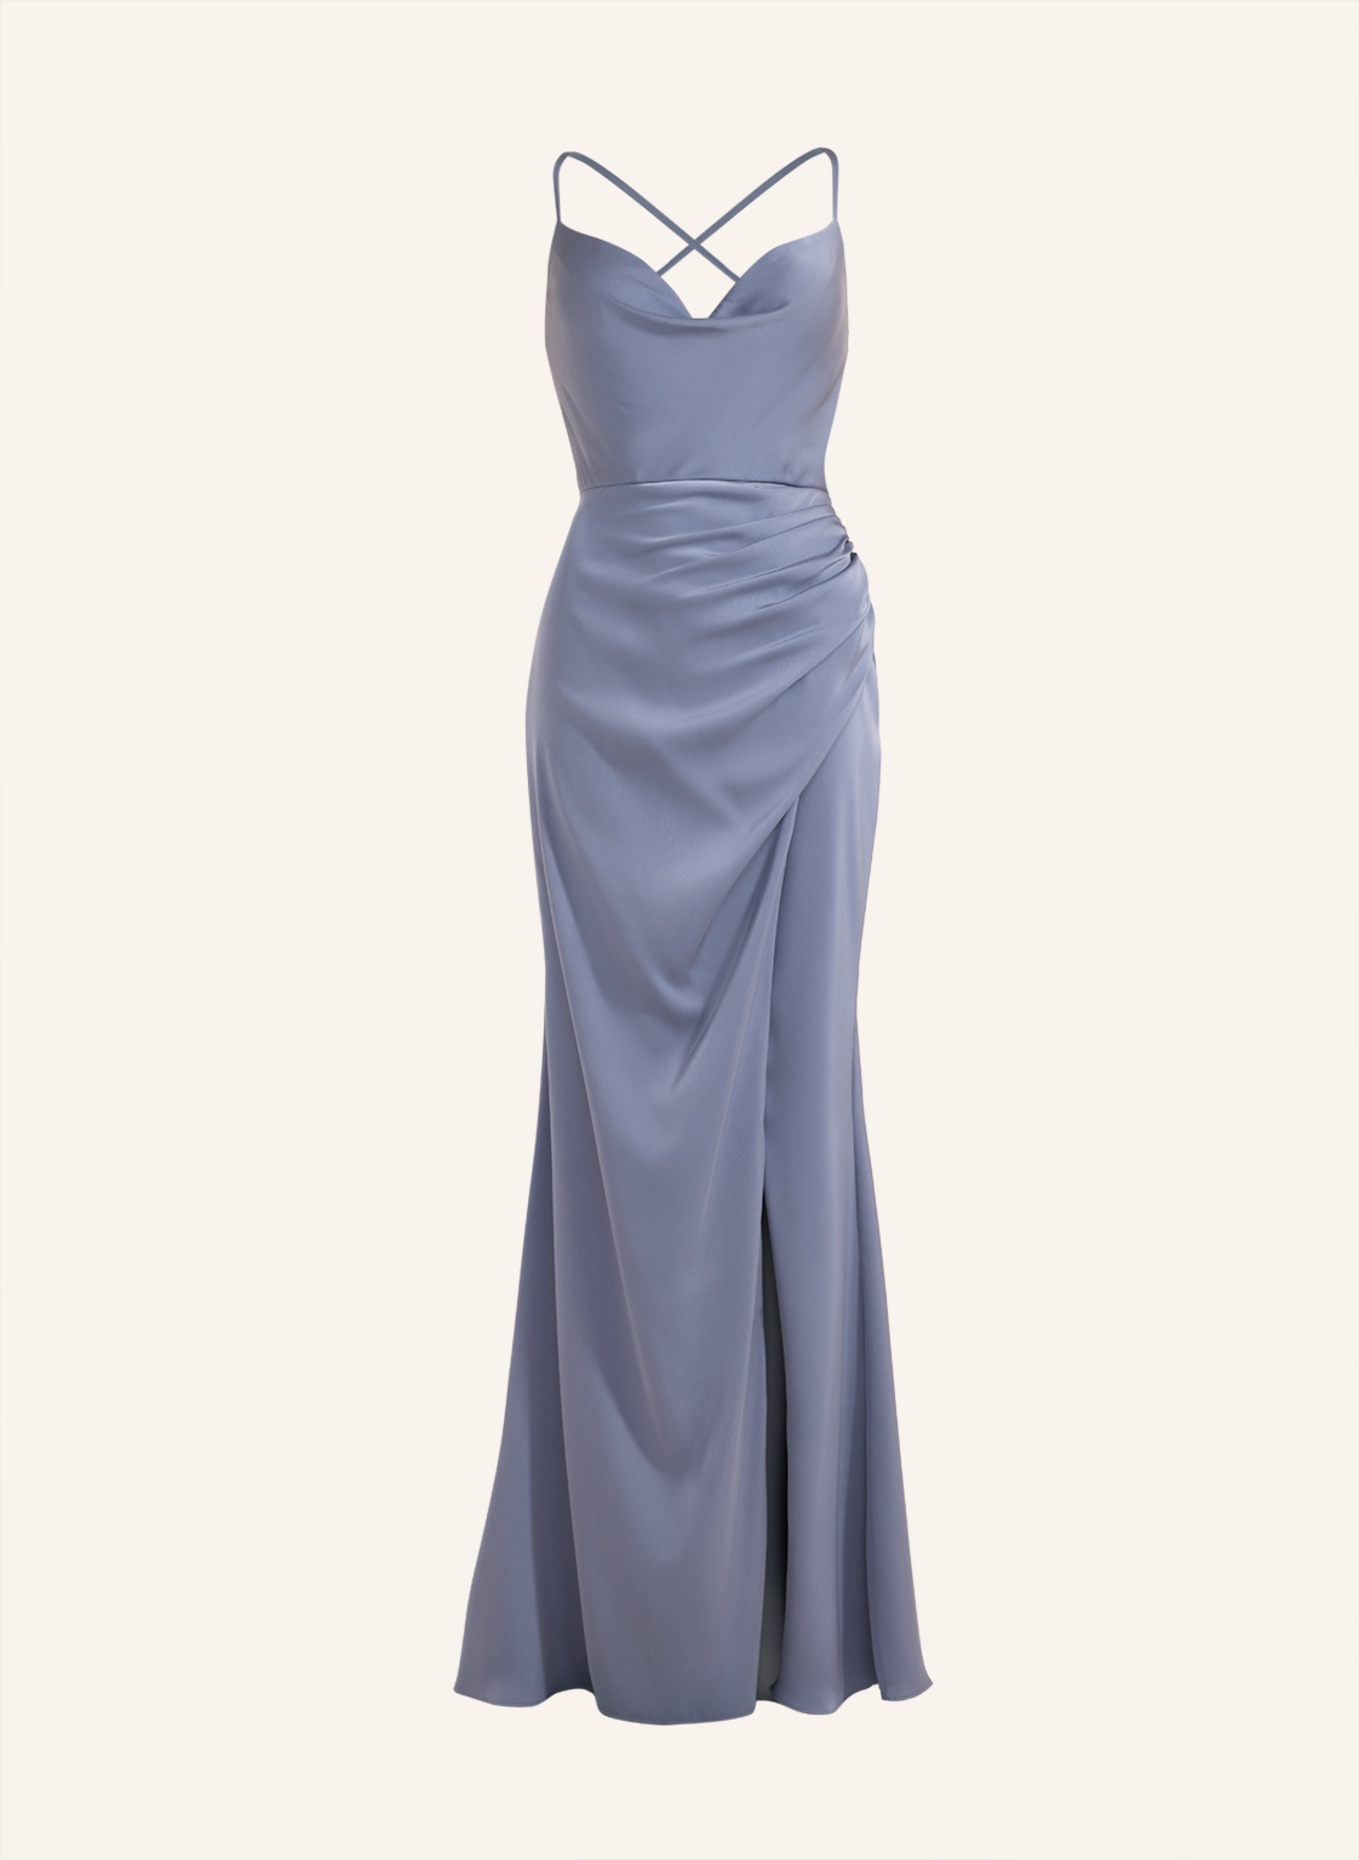 LAONA Kleid SATIN CHARMING DRESS, Farbe: BLAU (Bild 1)